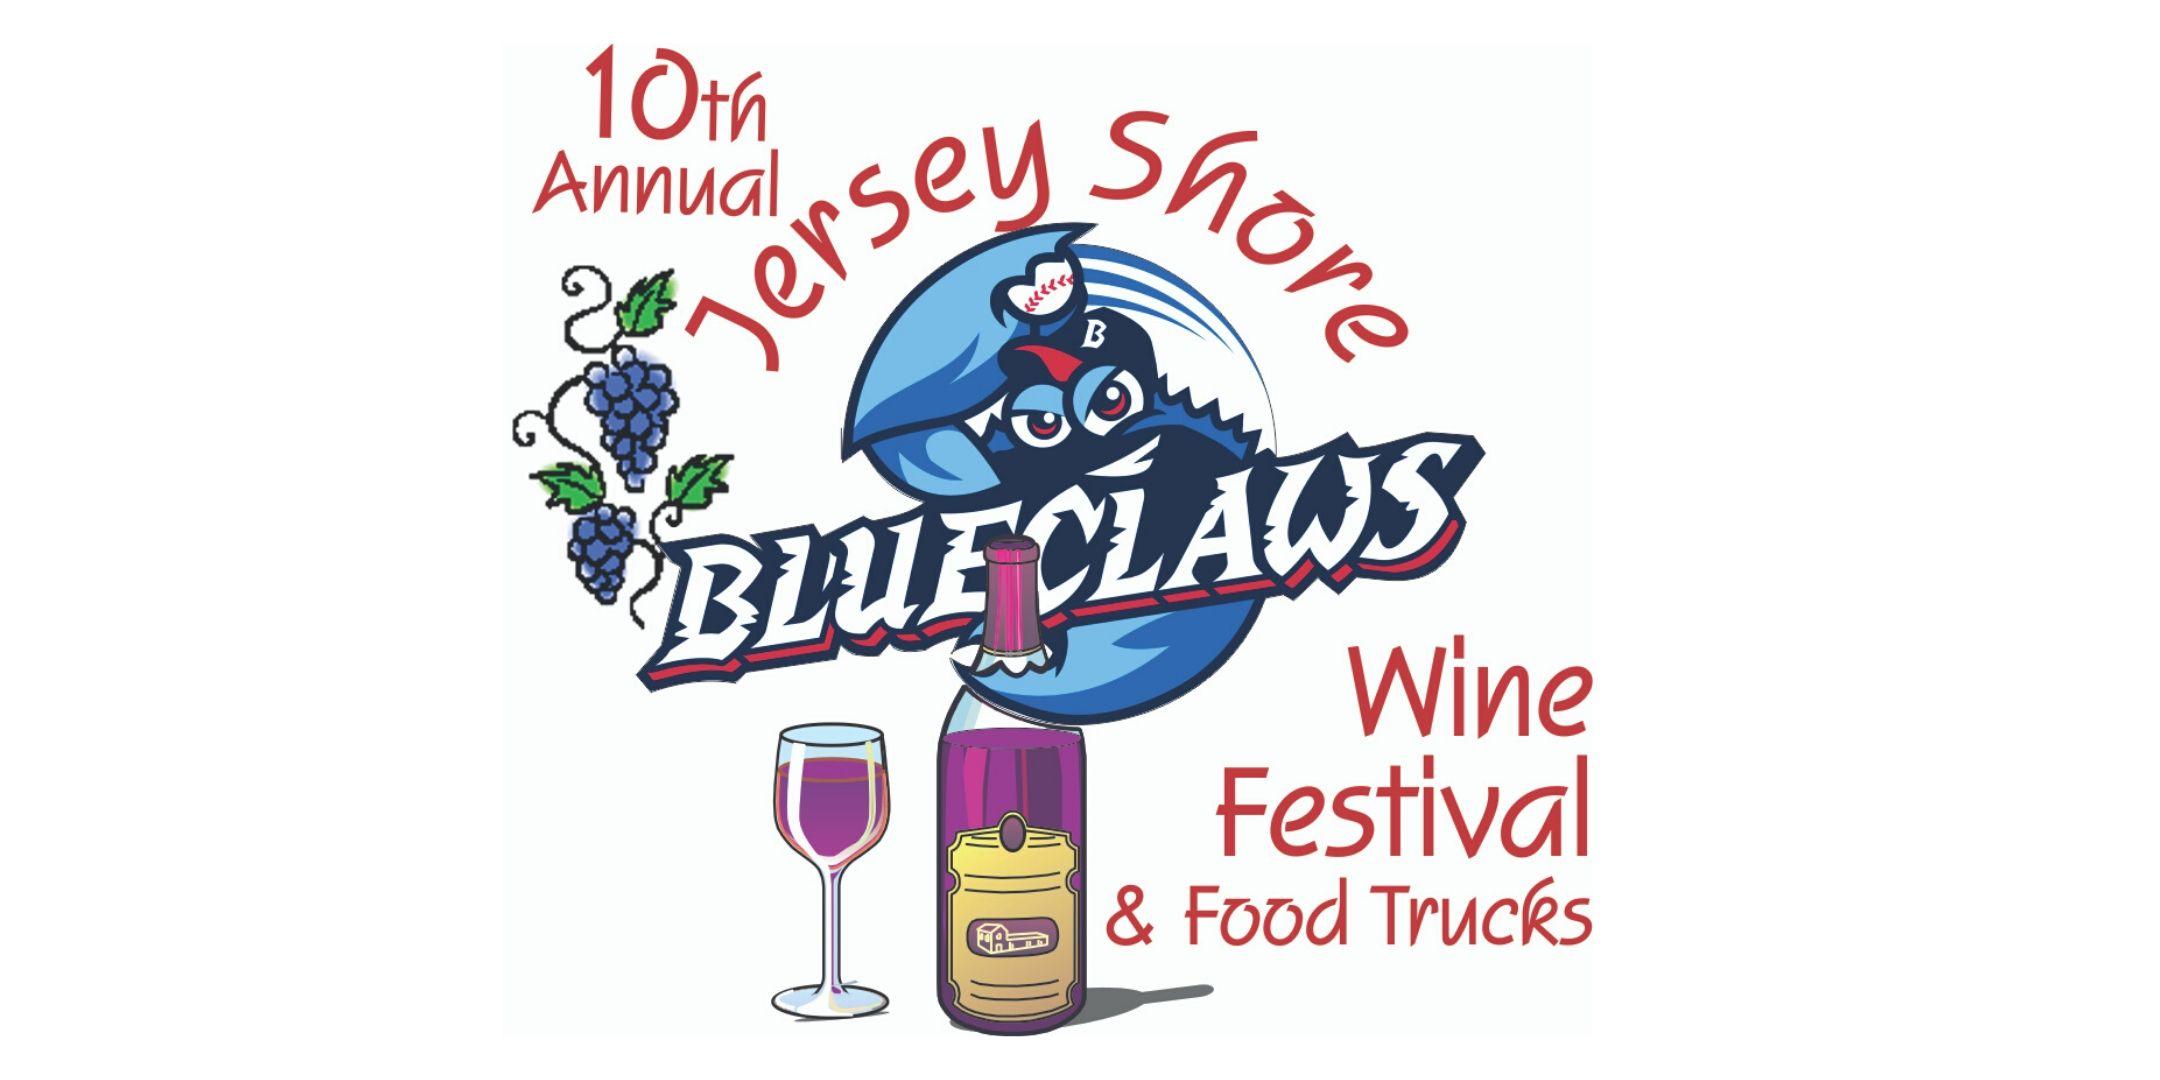 Jersey Shore Wine Festival & Food Trucks - 10th Annual - NEW DATE: 10/3/20